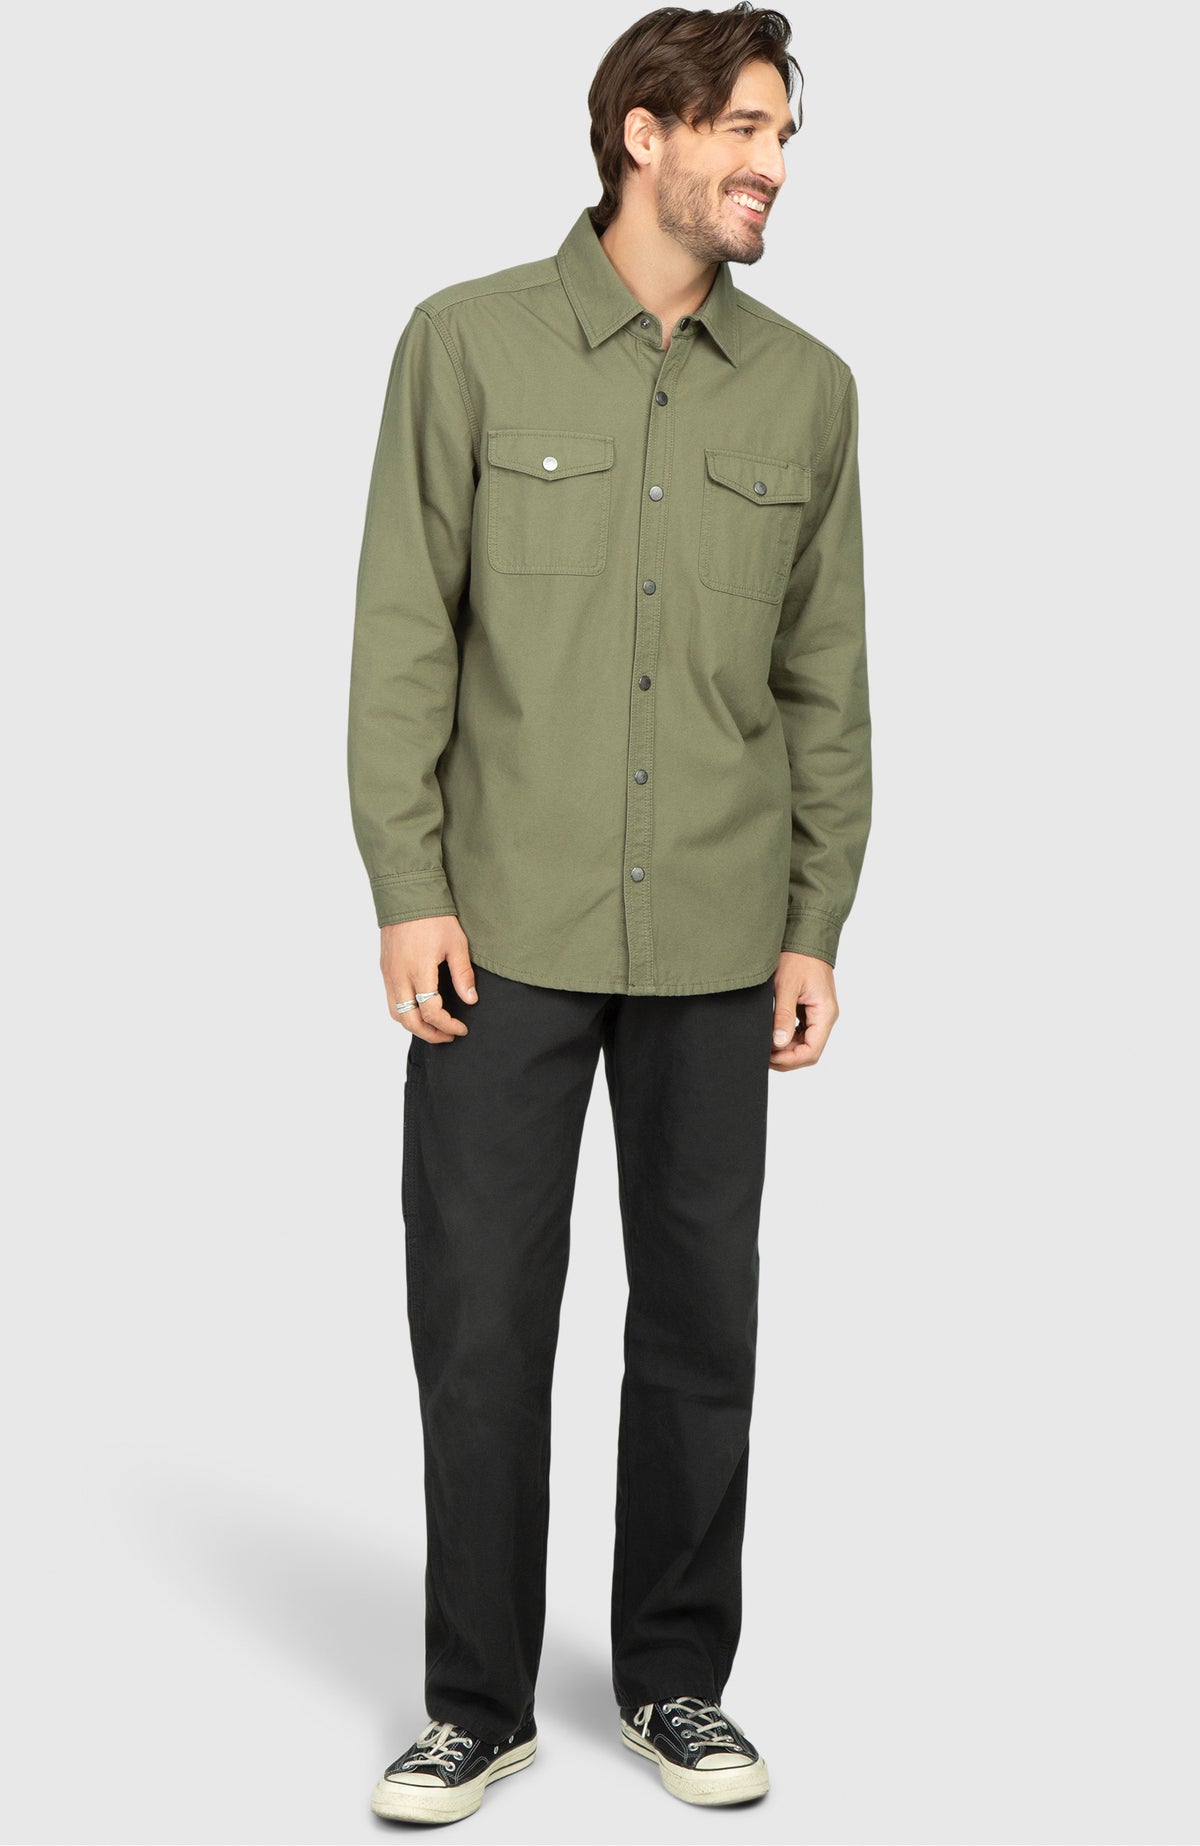 Sage Green Canvas Shirt Jacket - Full Length